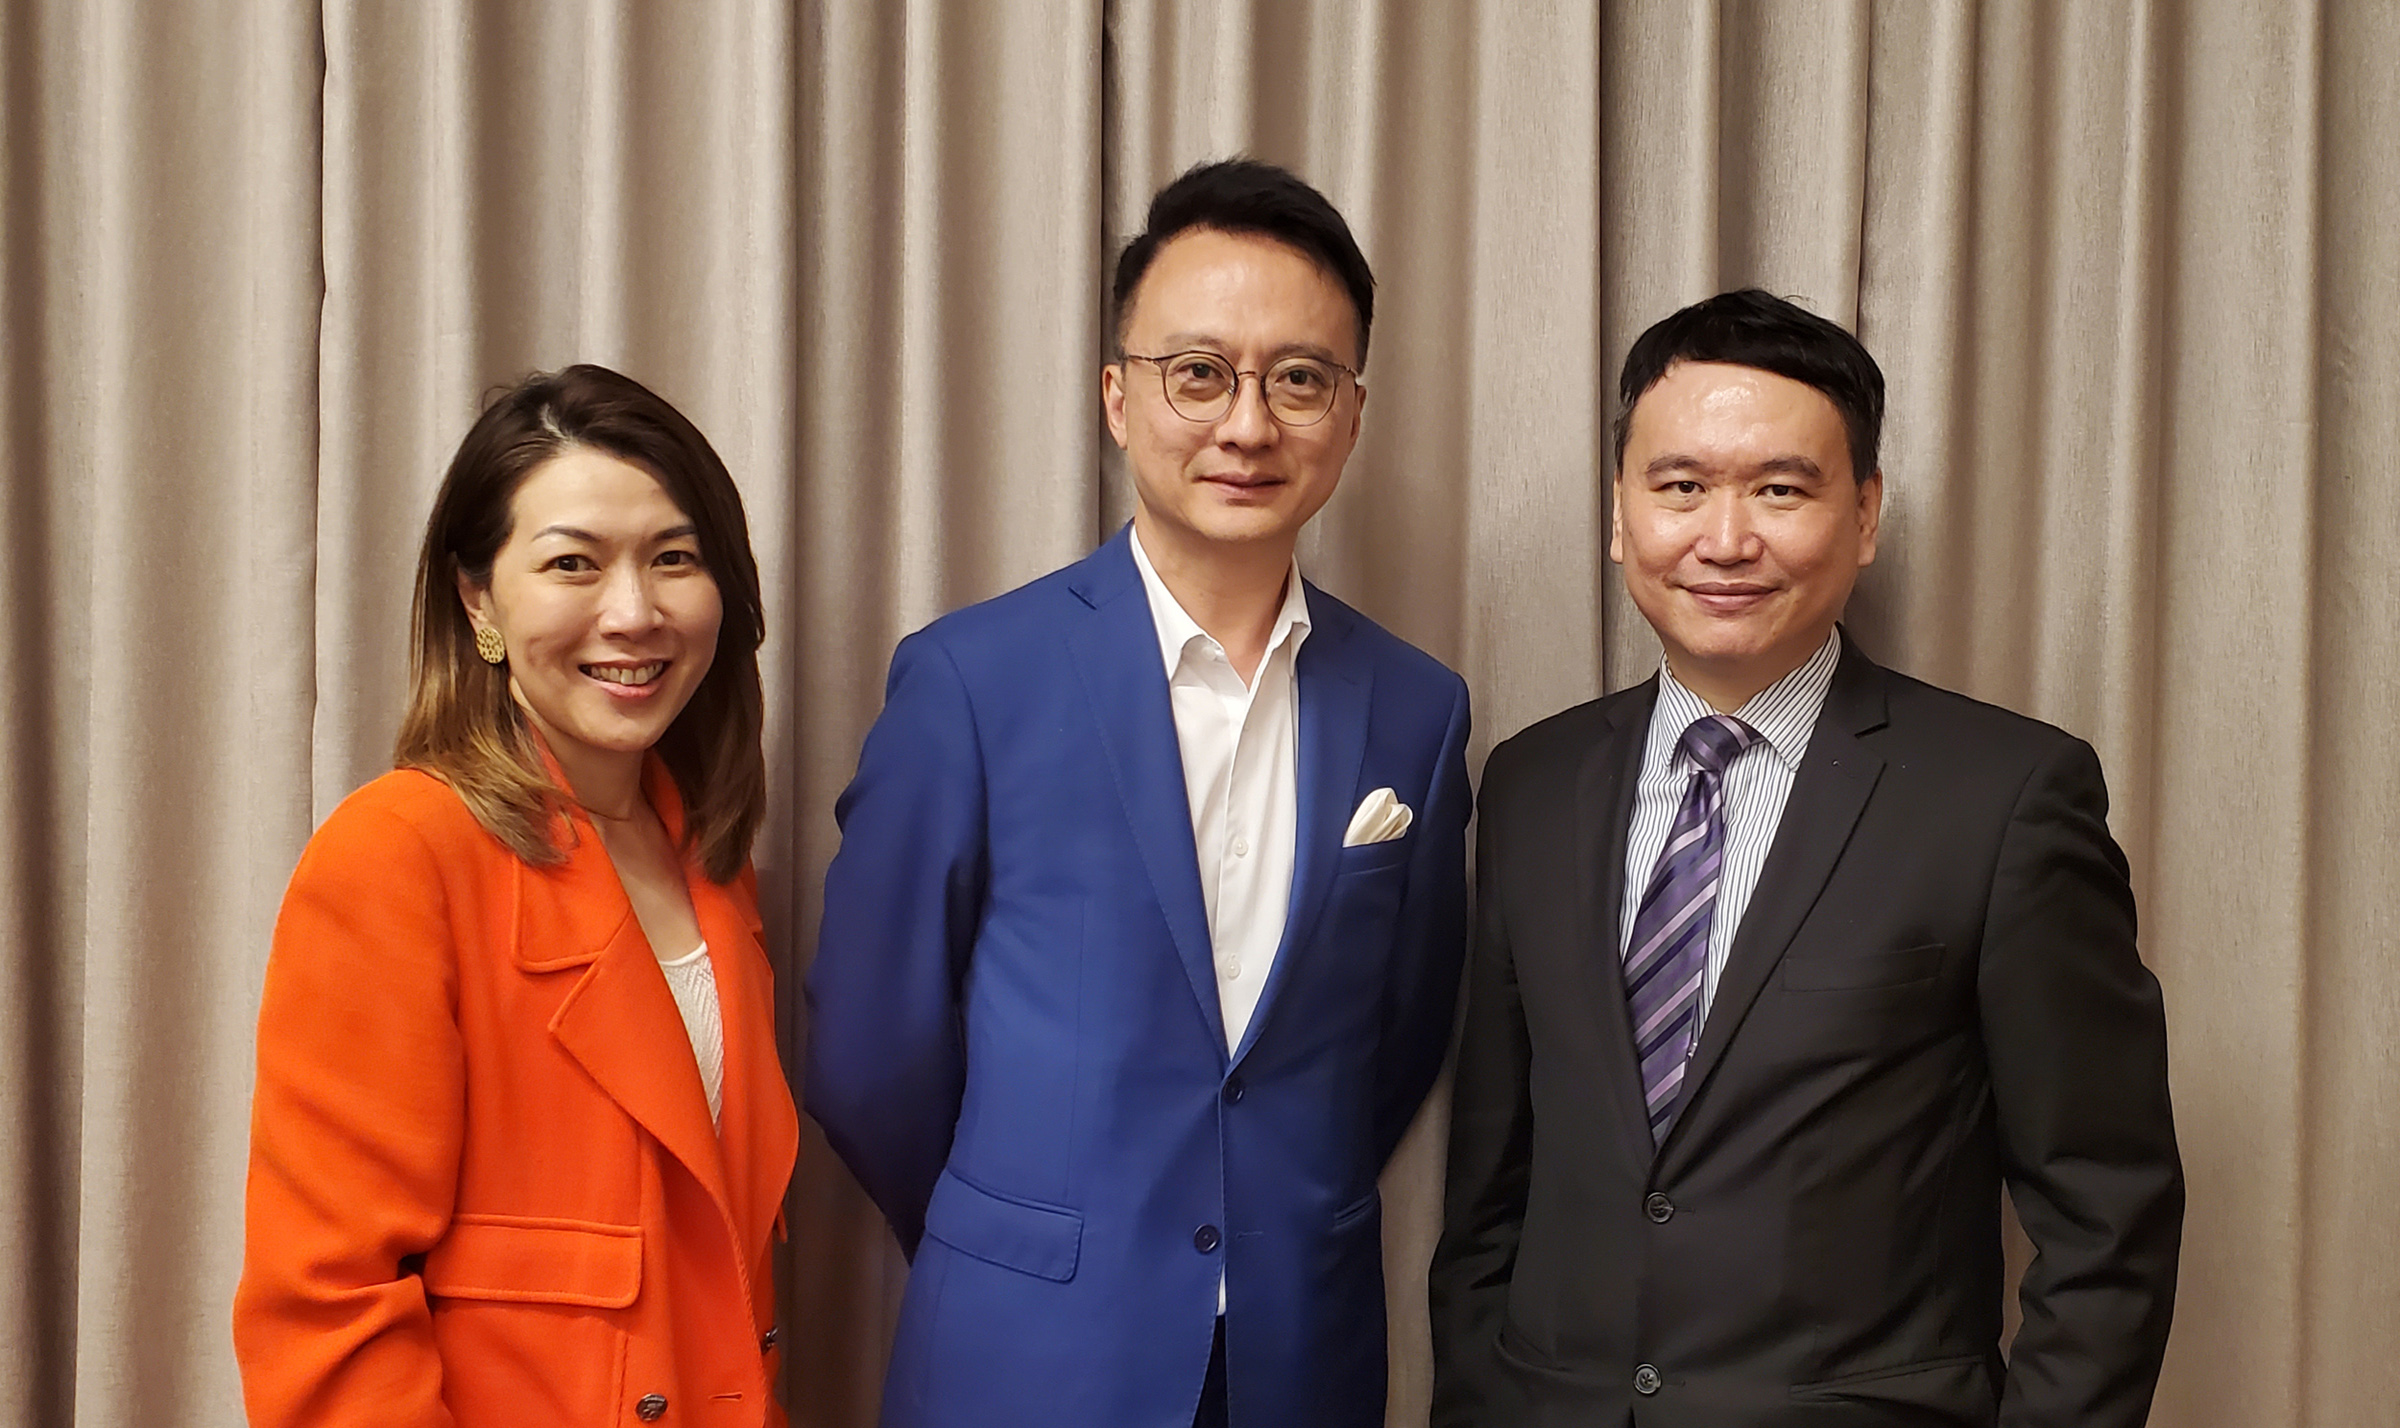 Professor Siew Ng, Professor Francis Chan and Professor Martin Wong